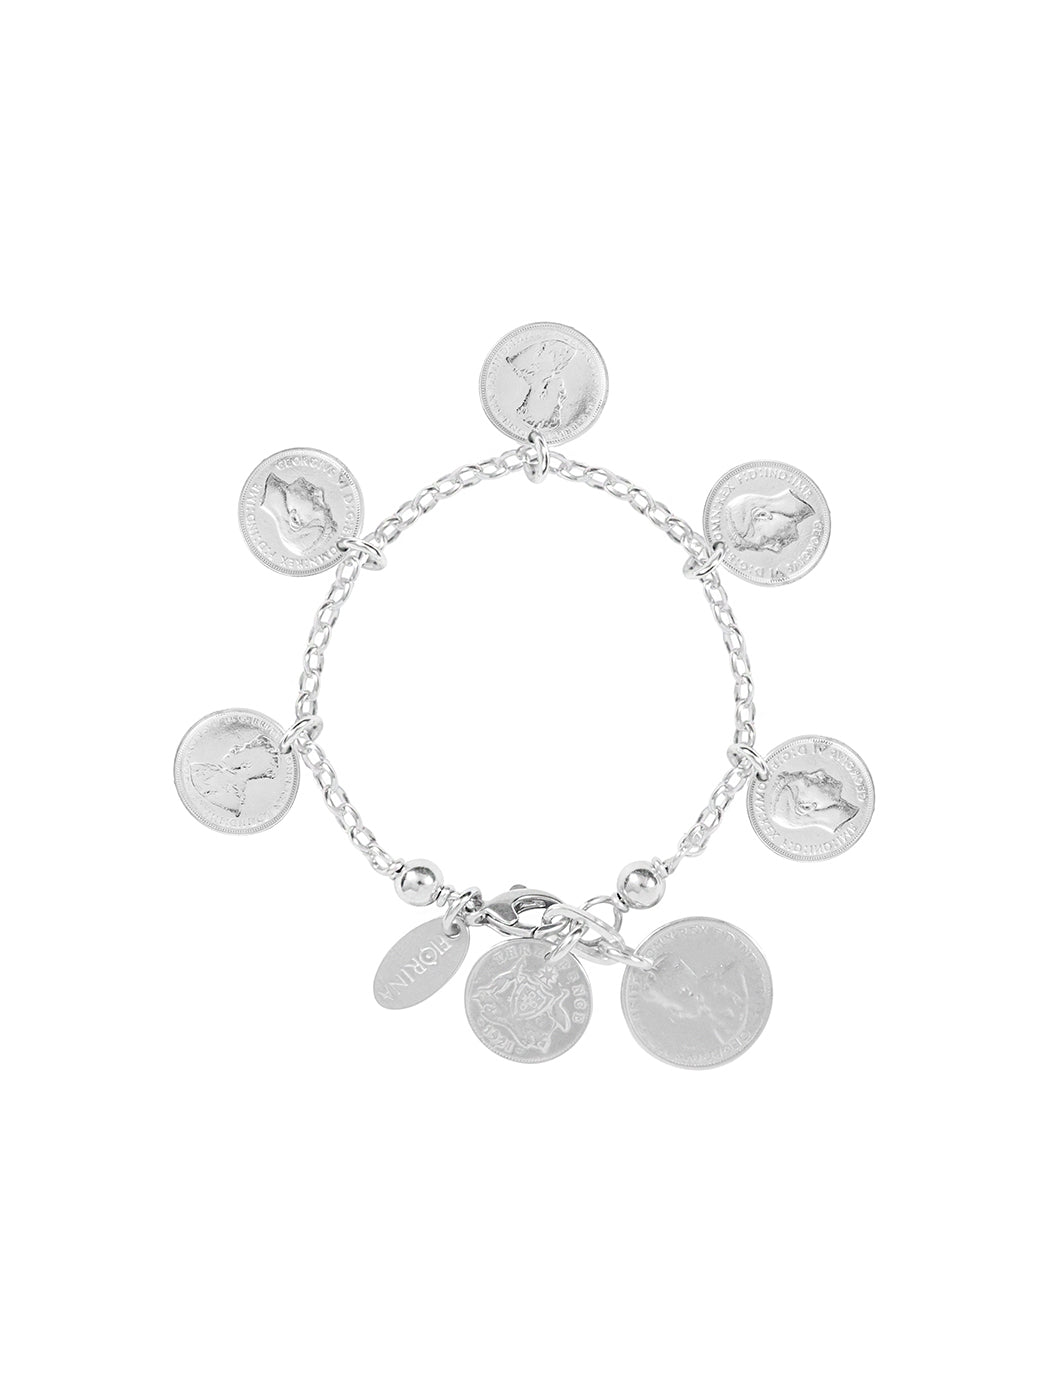 Fashion Jewelry charm maxi Bracelets & Bangles vintage boho silver coin  bracelets for Women Gift | Fashion jewelry, Bangle bracelets, Coin bracelet